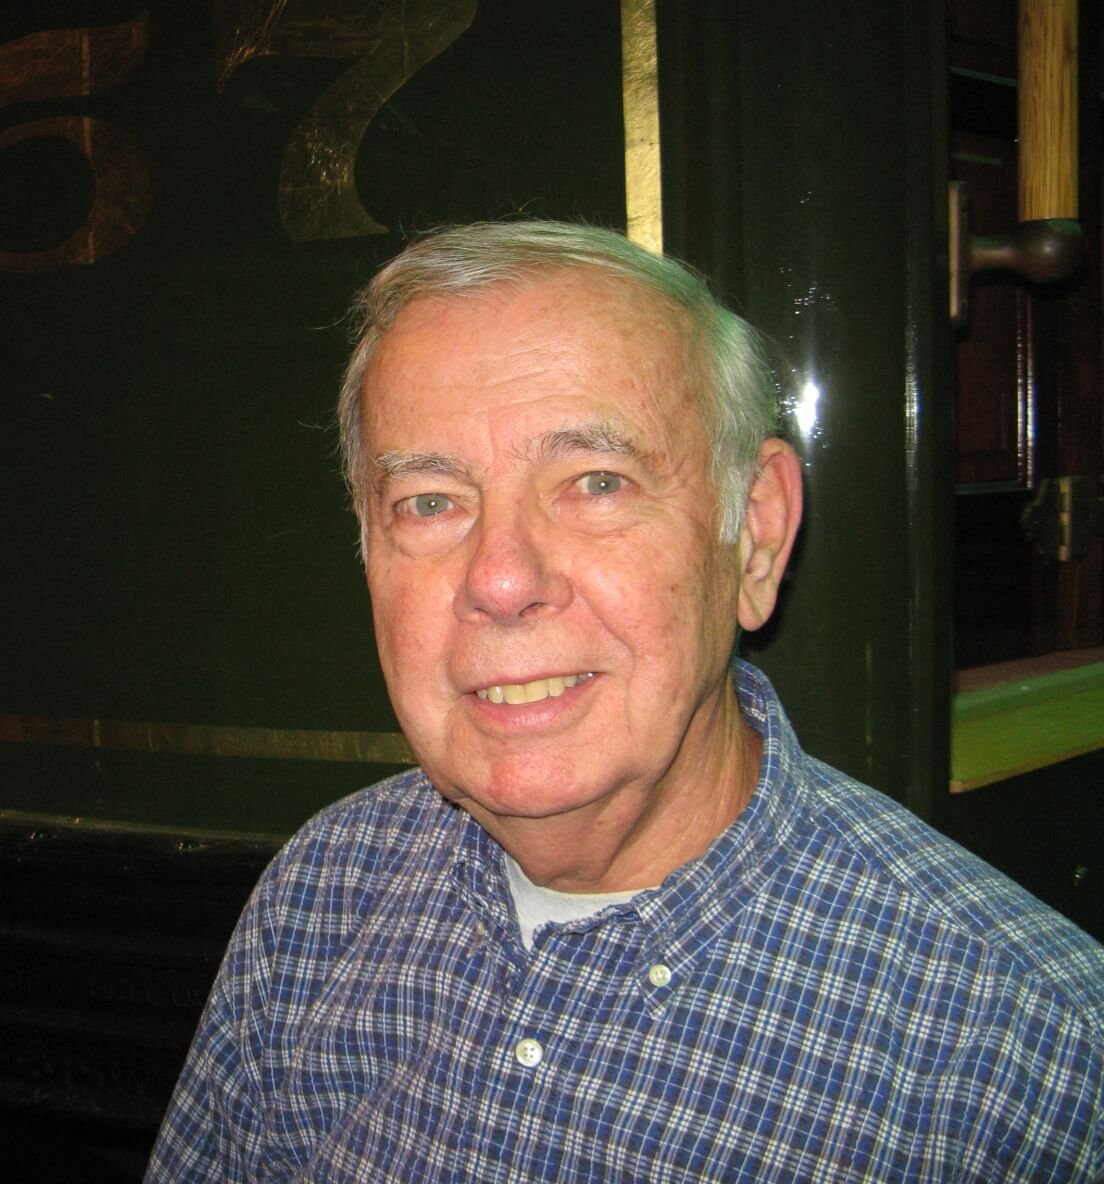  Jim Dierks, Secretary of the New York Museum of Transportation Board